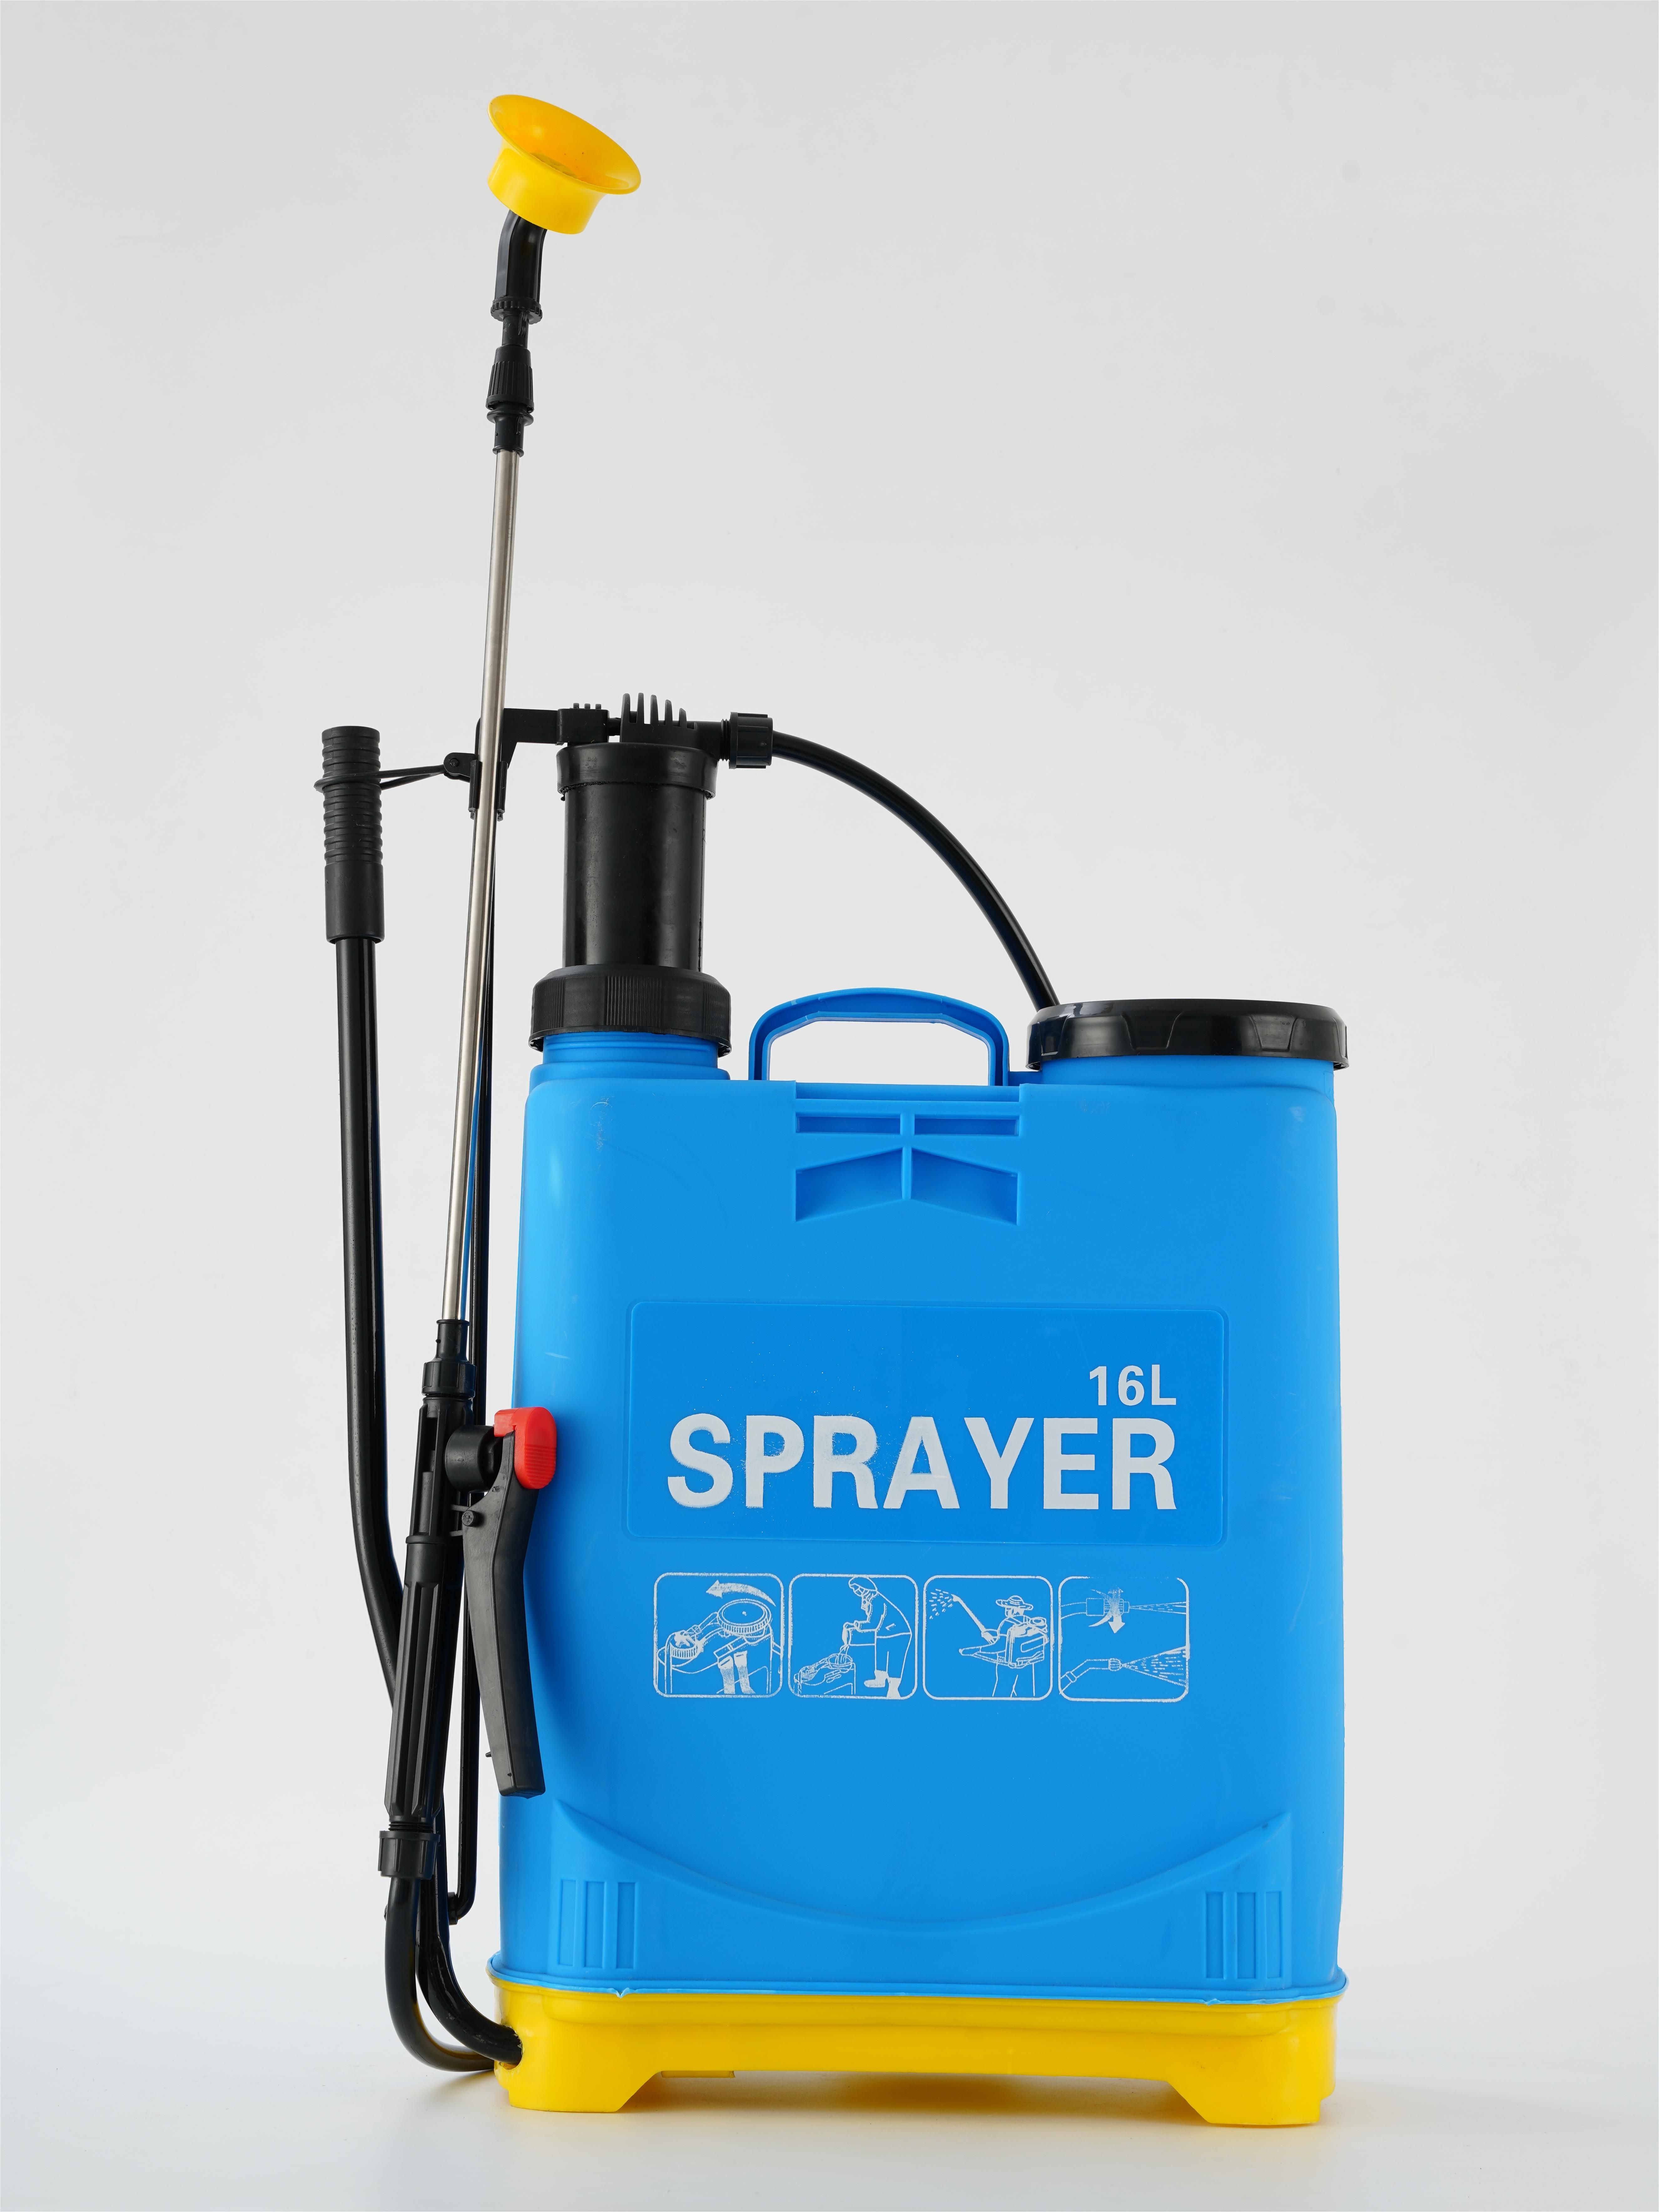 Agricultural knapsack sprayer 16L GW-M-PB-16L-1 hand controlled knapsack 16 Litre sprayer manual sprayer chemical sprayer